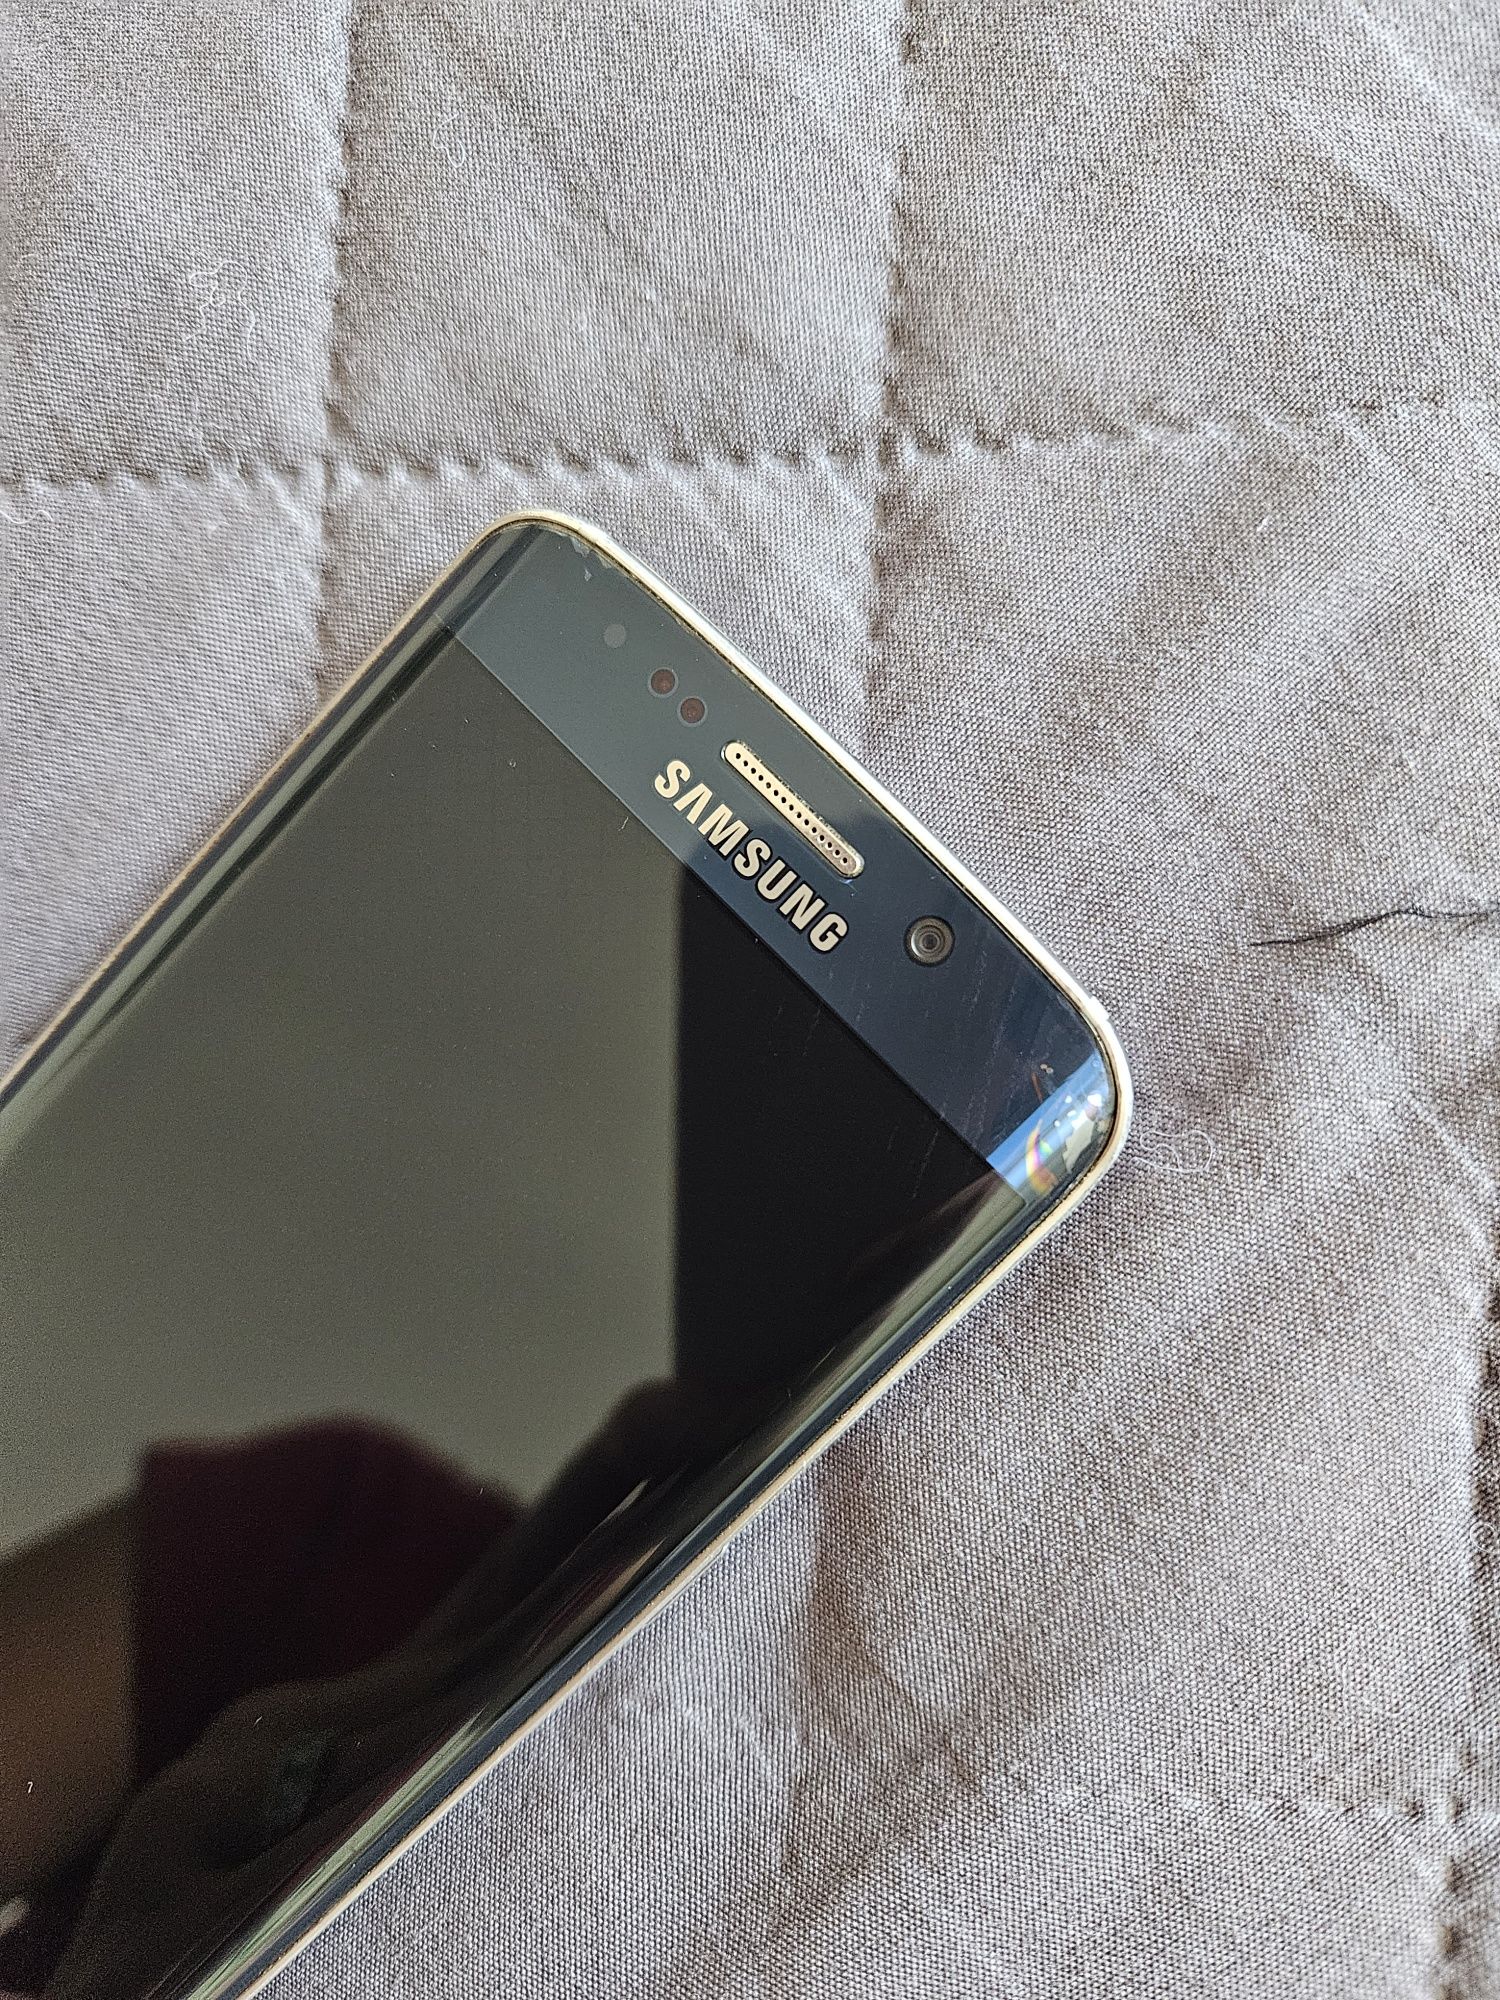 Samsung Galaxy S6 EDGE telefon komórkowy android